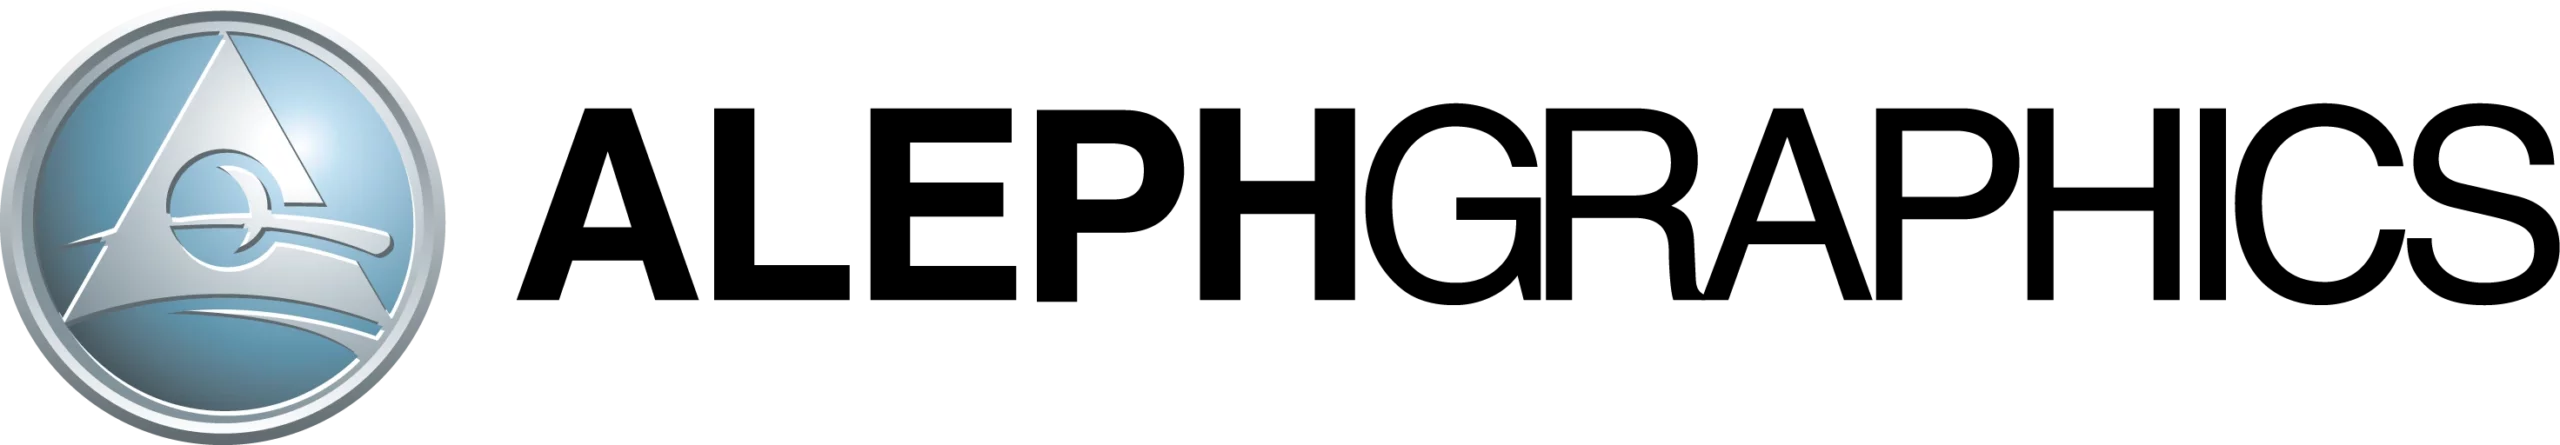 Alephgraphics Logo